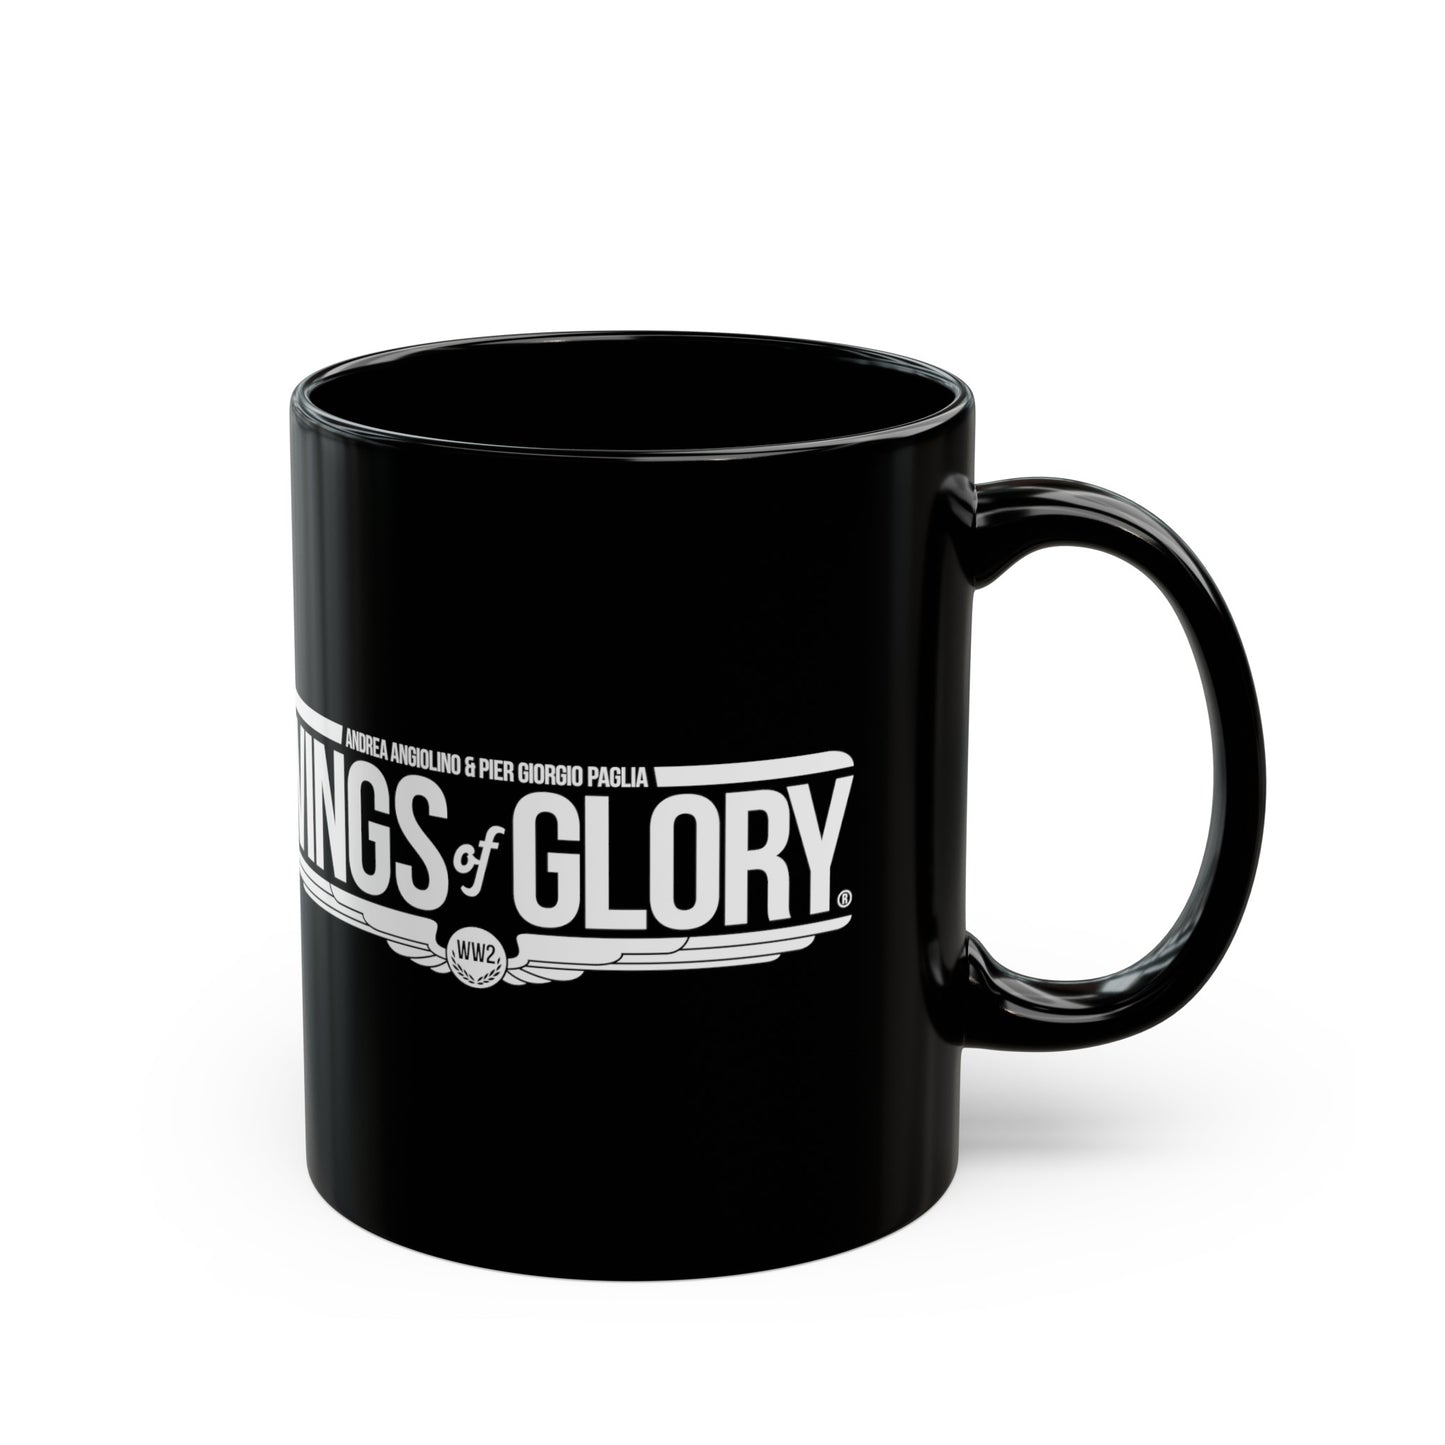 Wings of Glory WW2 Black Mug (11oz, 15oz)